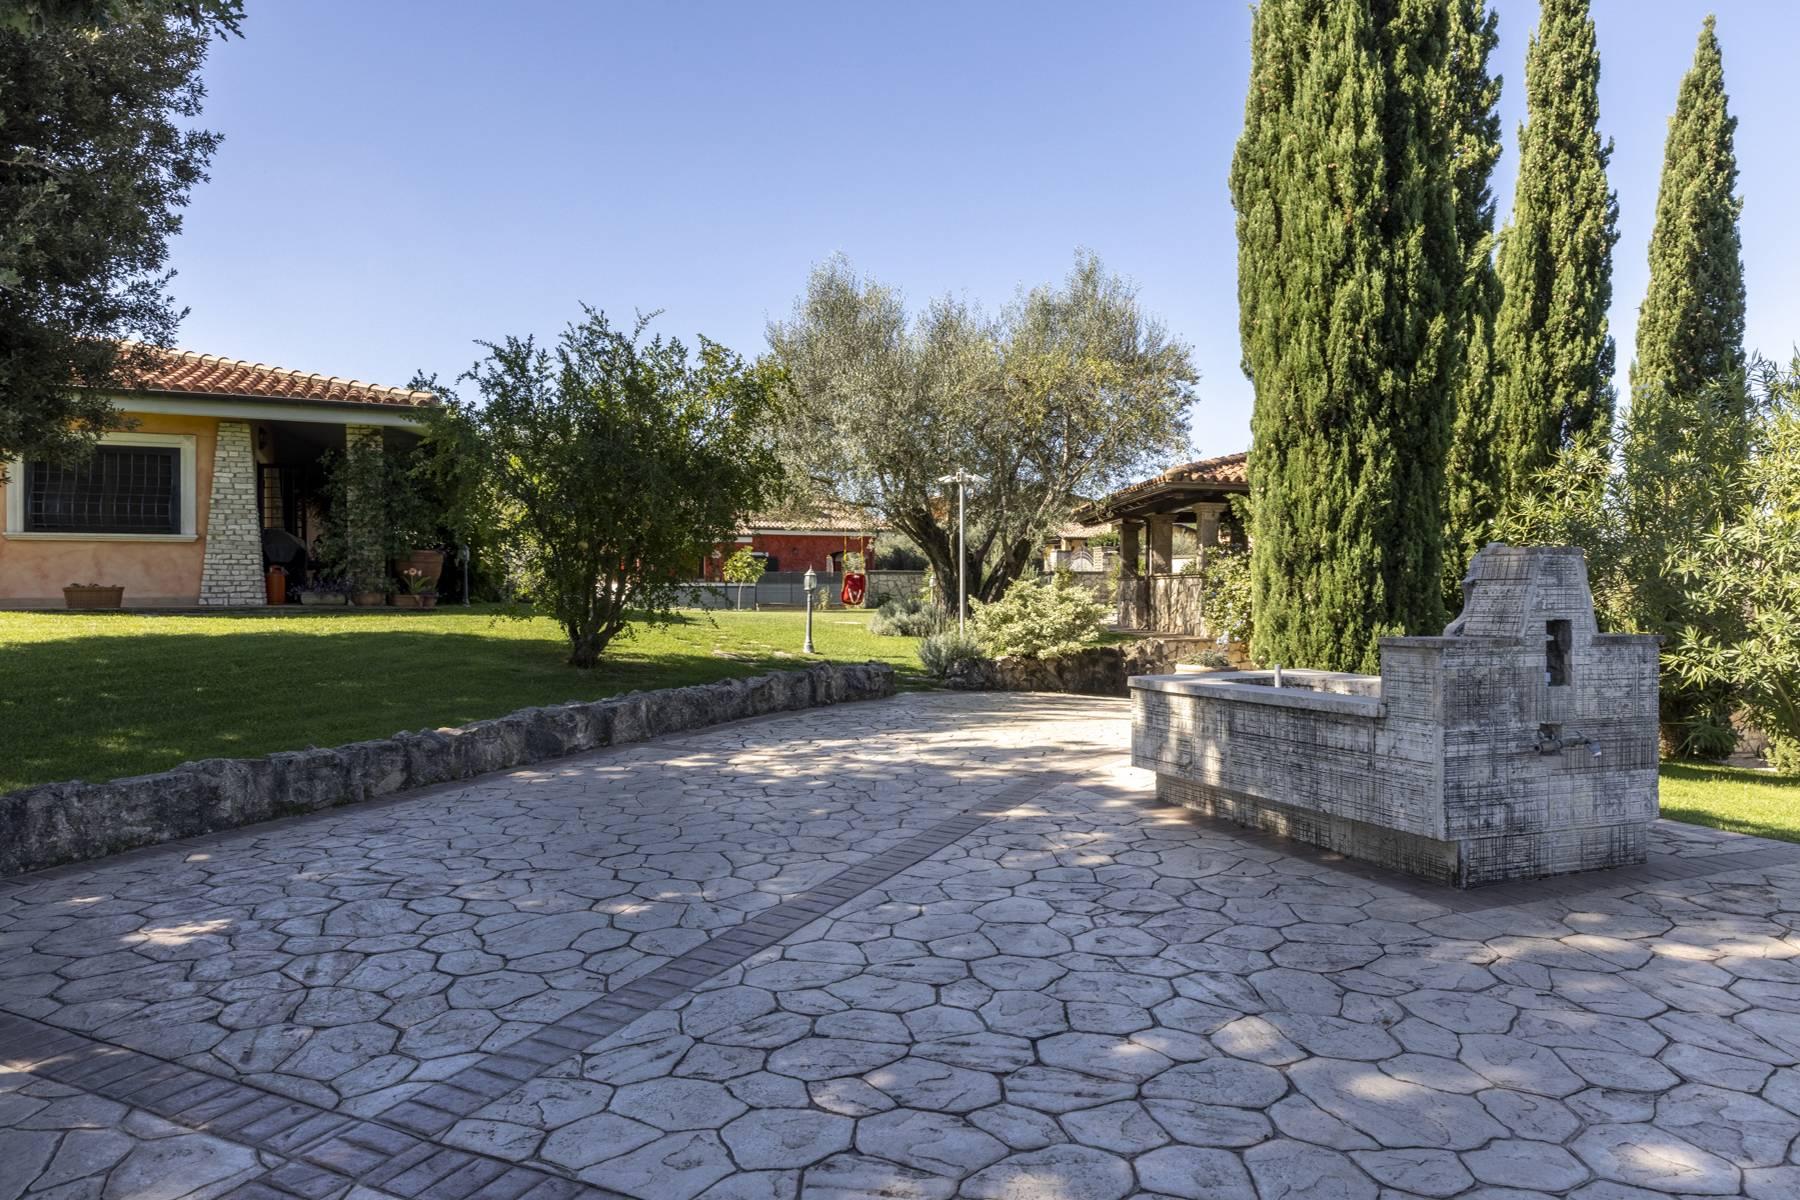 Moderna villa con piscina a due passi da Roma - 14